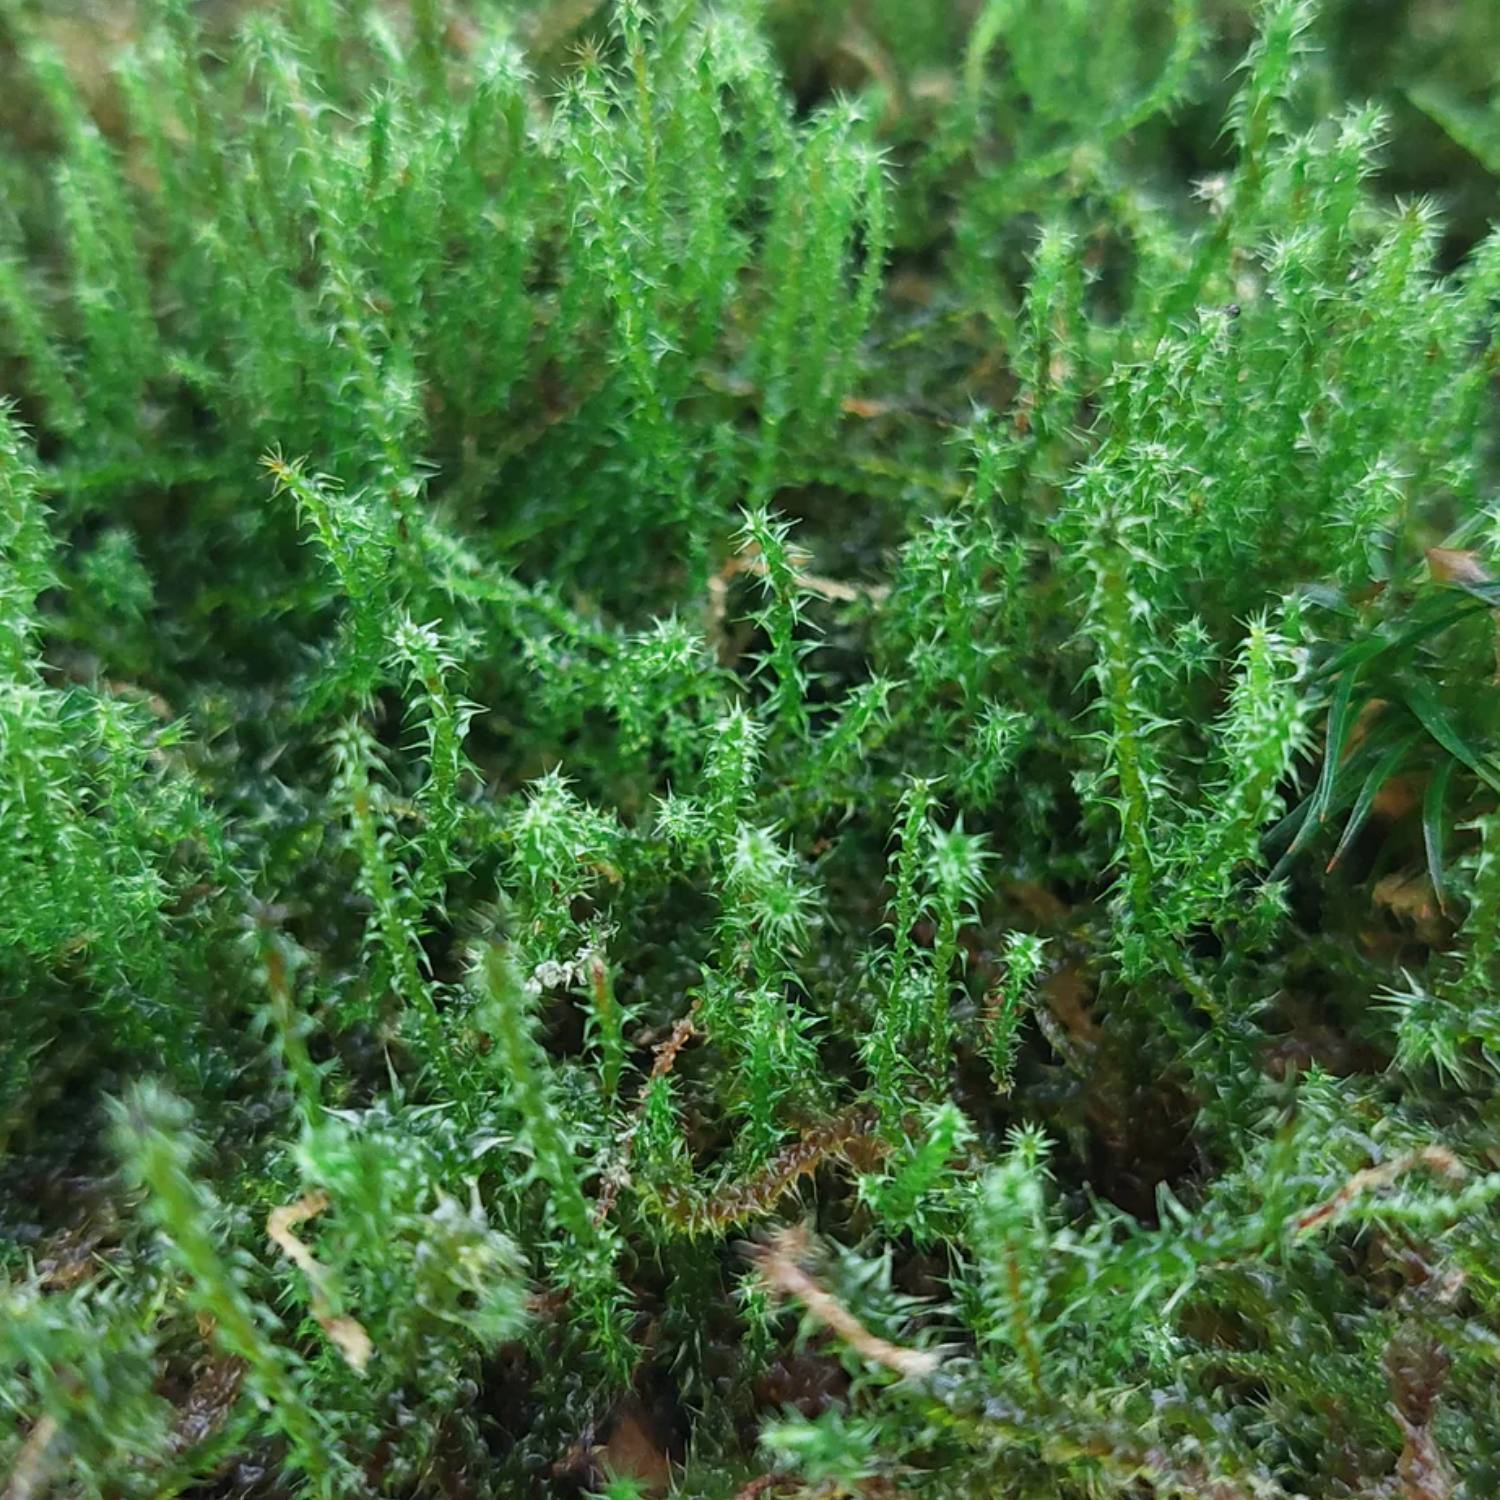 Springy turf moss